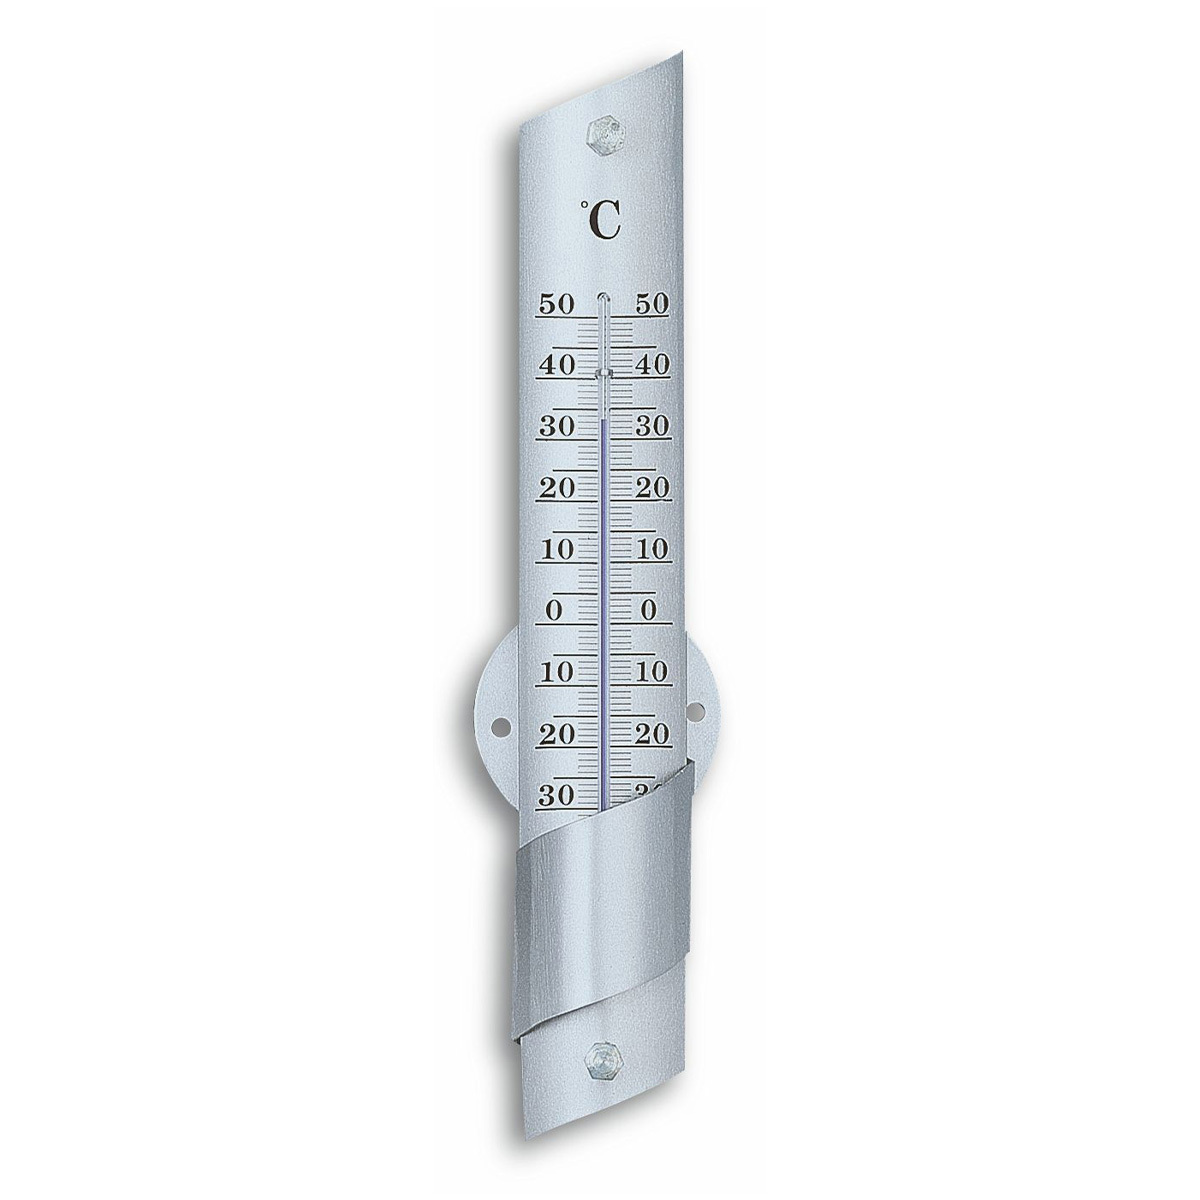 Analoges Innen-Außen-Thermometer aus Aluminium